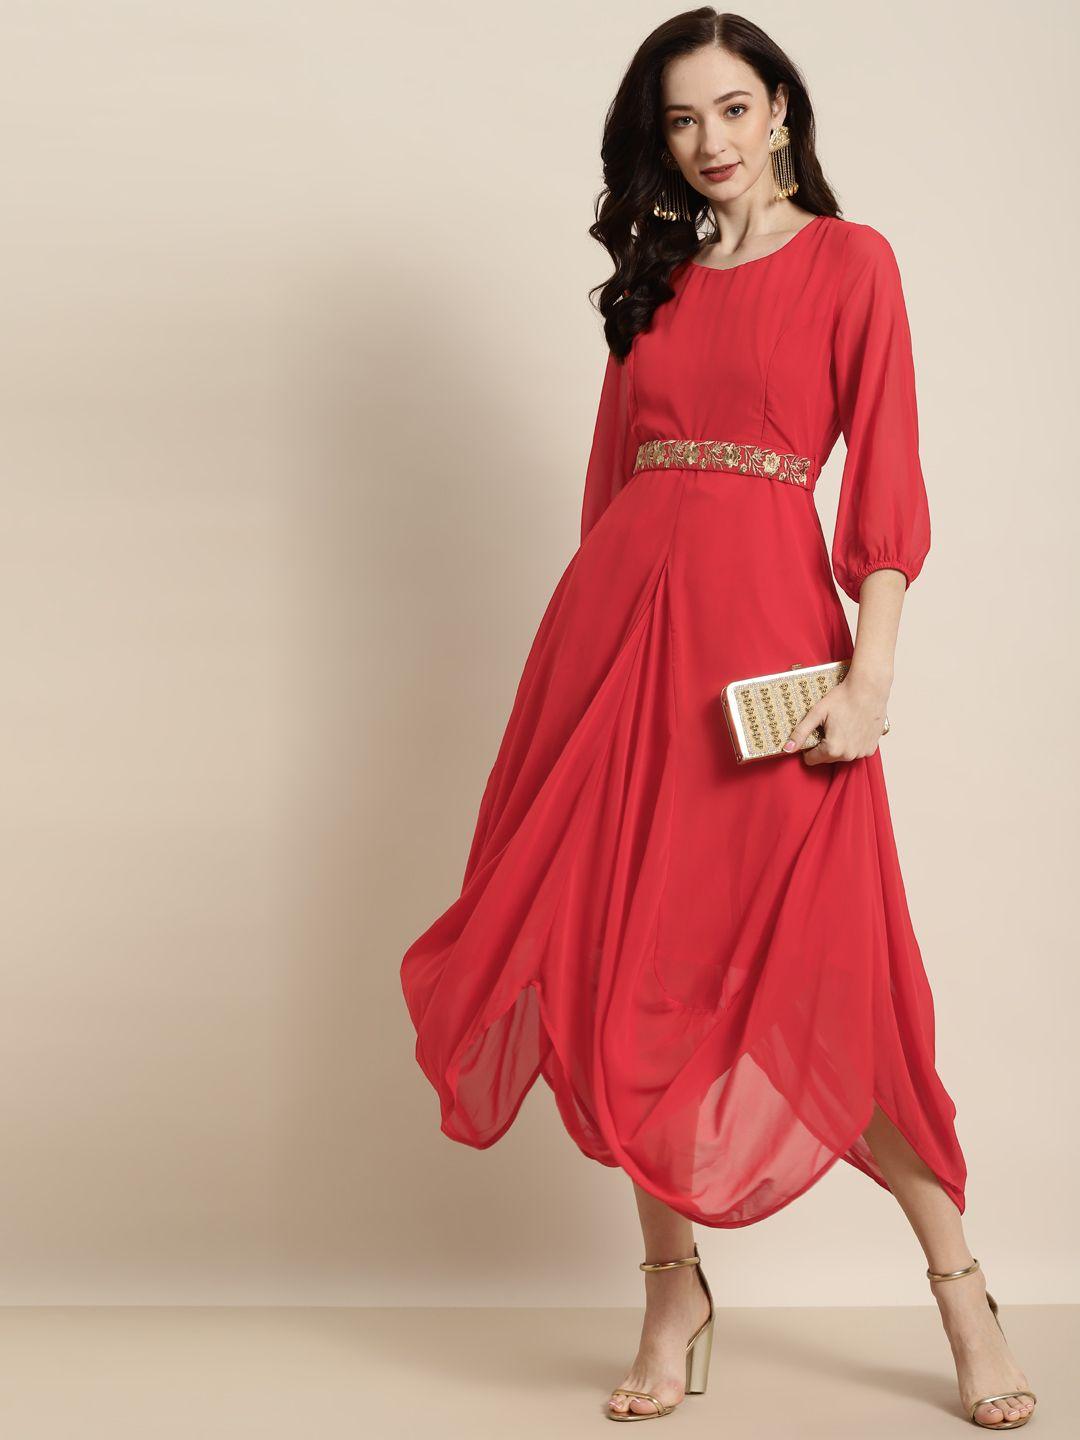 shae by sassafras red georgette ethnic embroidered belt dhoti dress